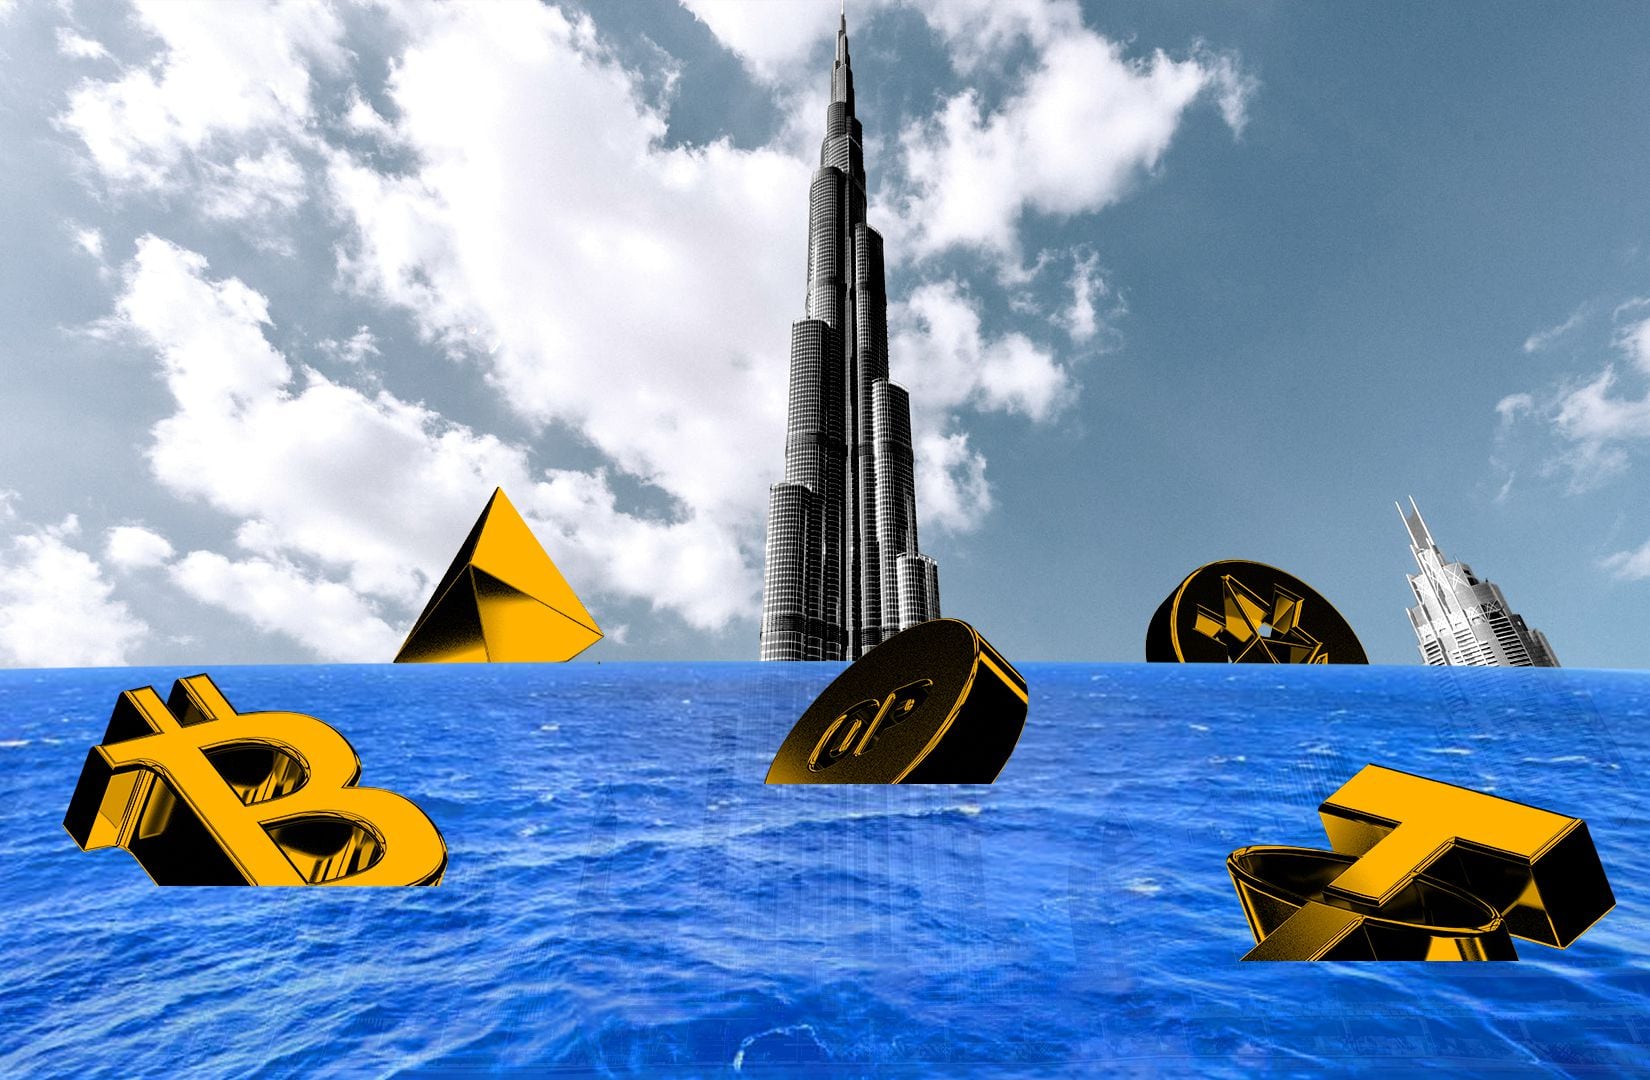 Biblical Dubai floods can’t douse spirit ahead of crypto bonanza: ‘I’ll do my keynote virtually’